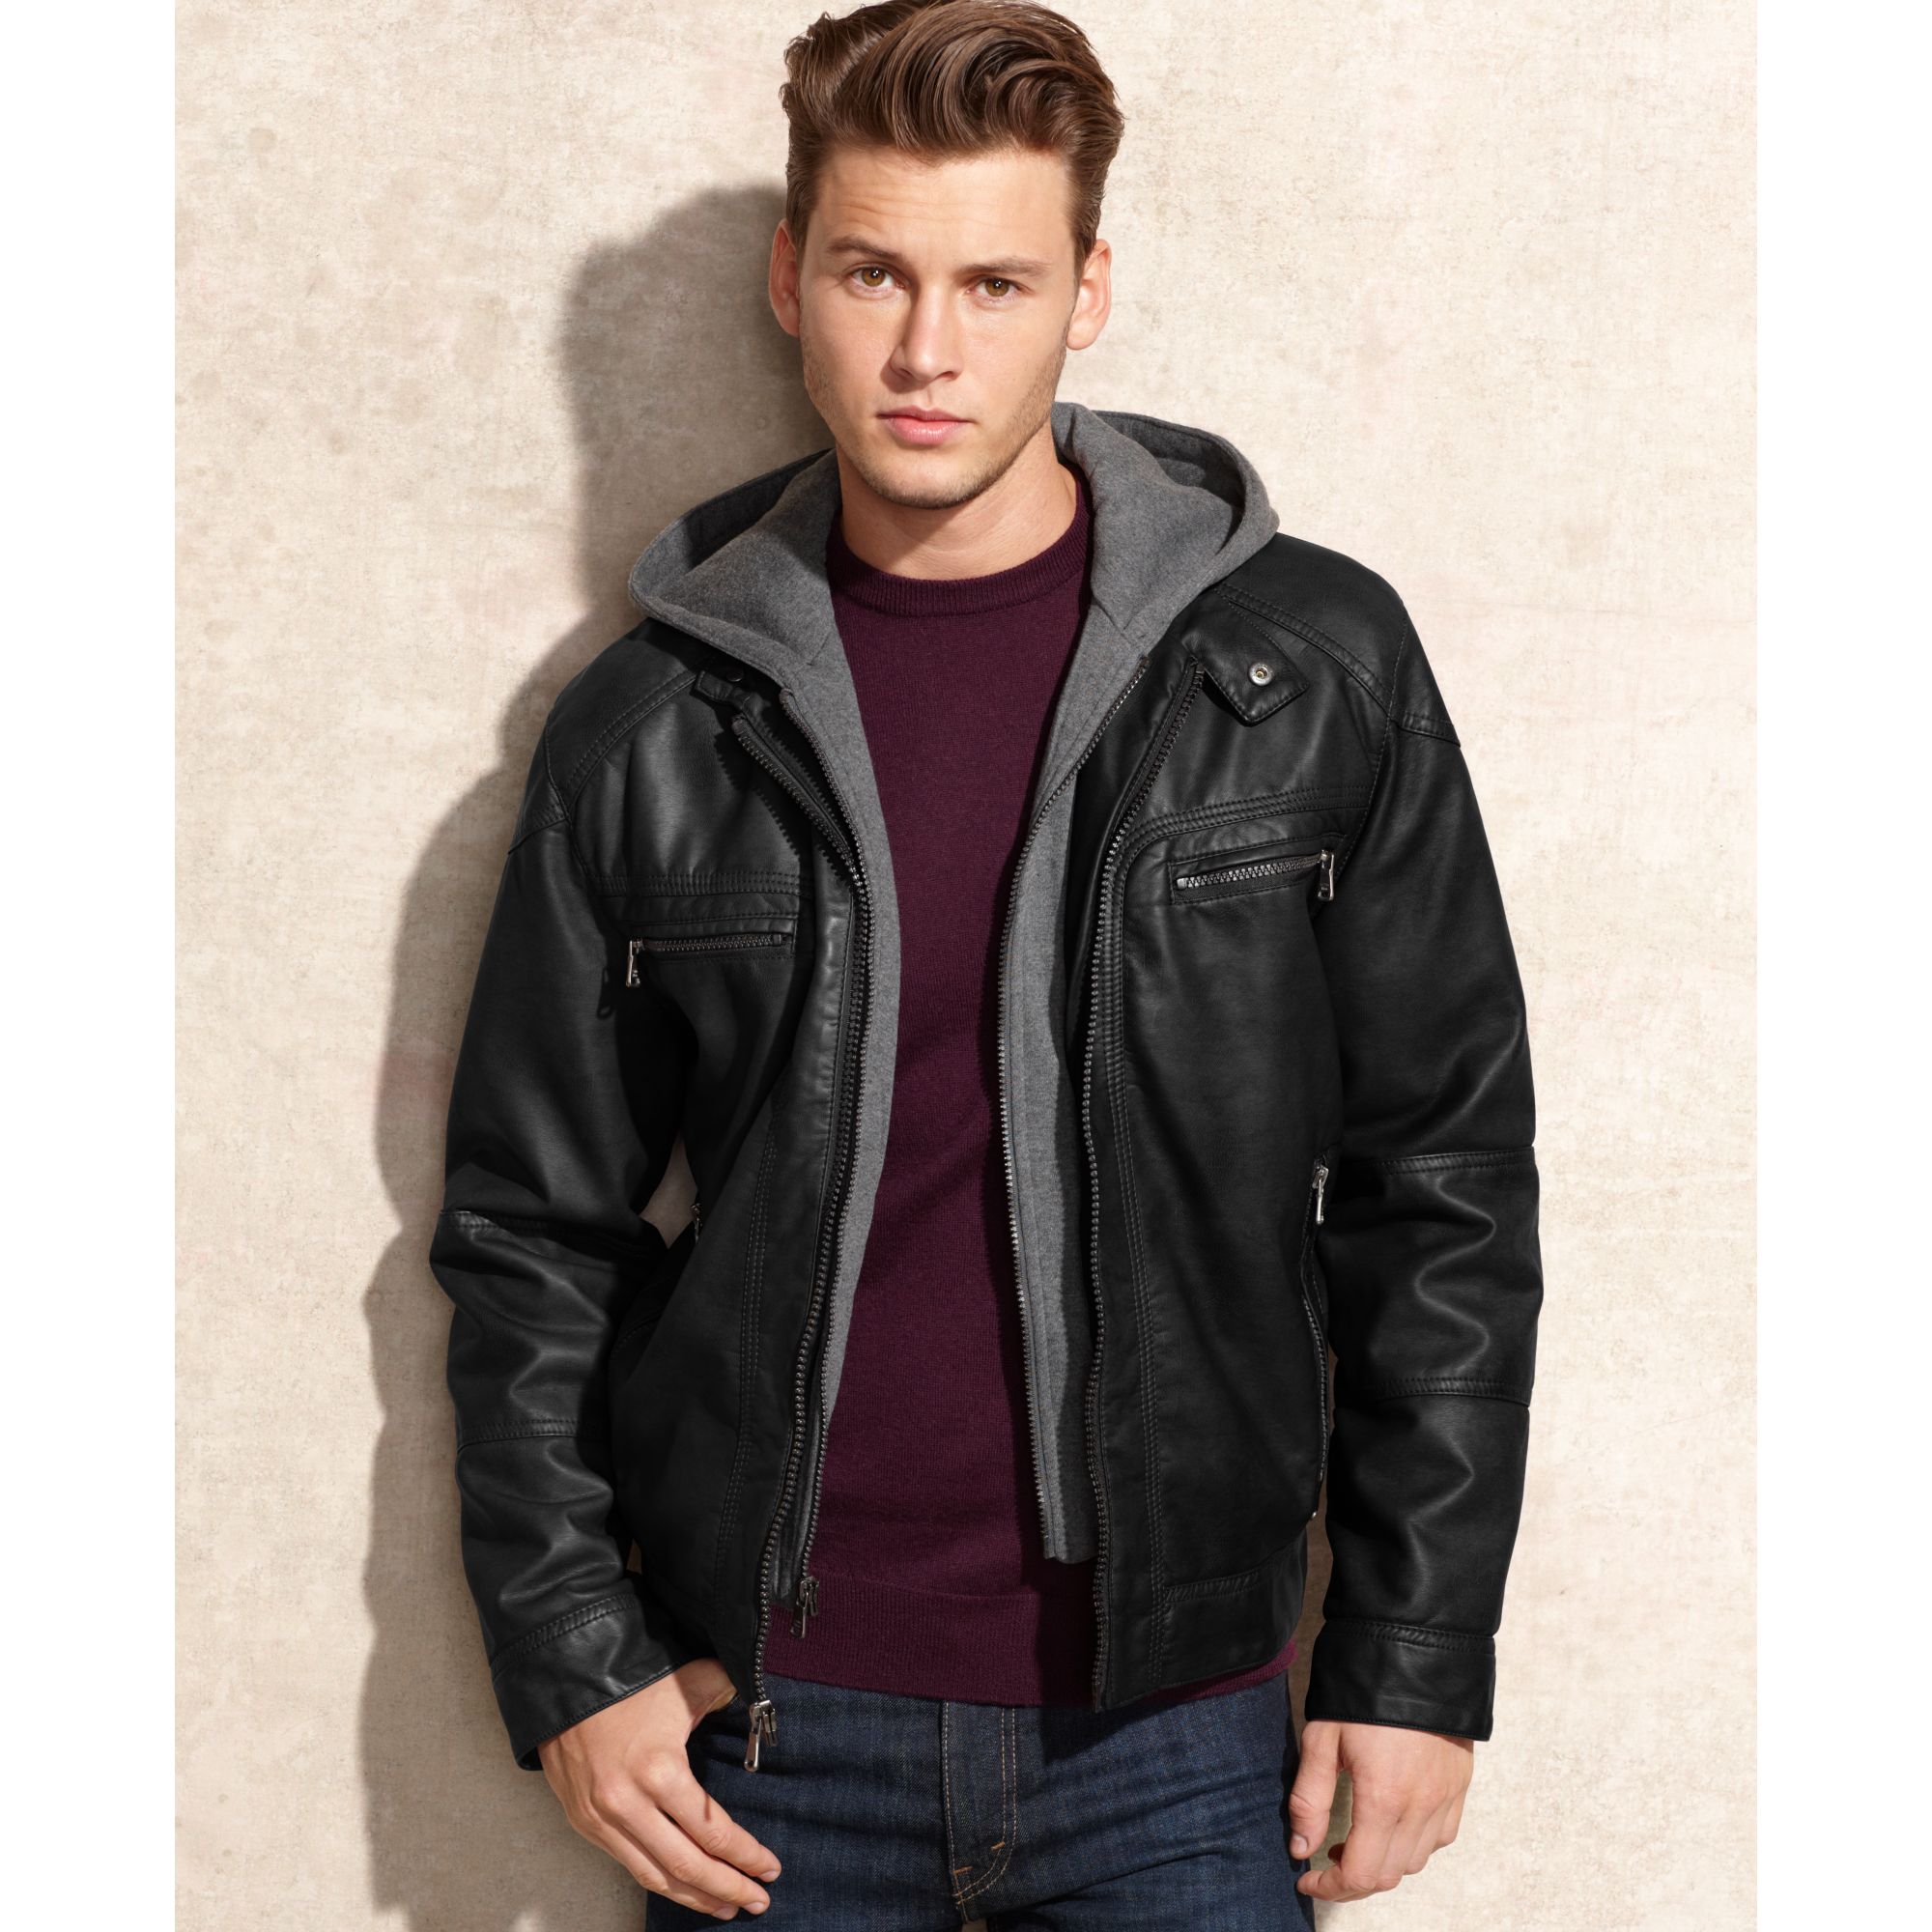 Calvin Klein Hooded Faux Leather Jacket in Black for Men - Lyst